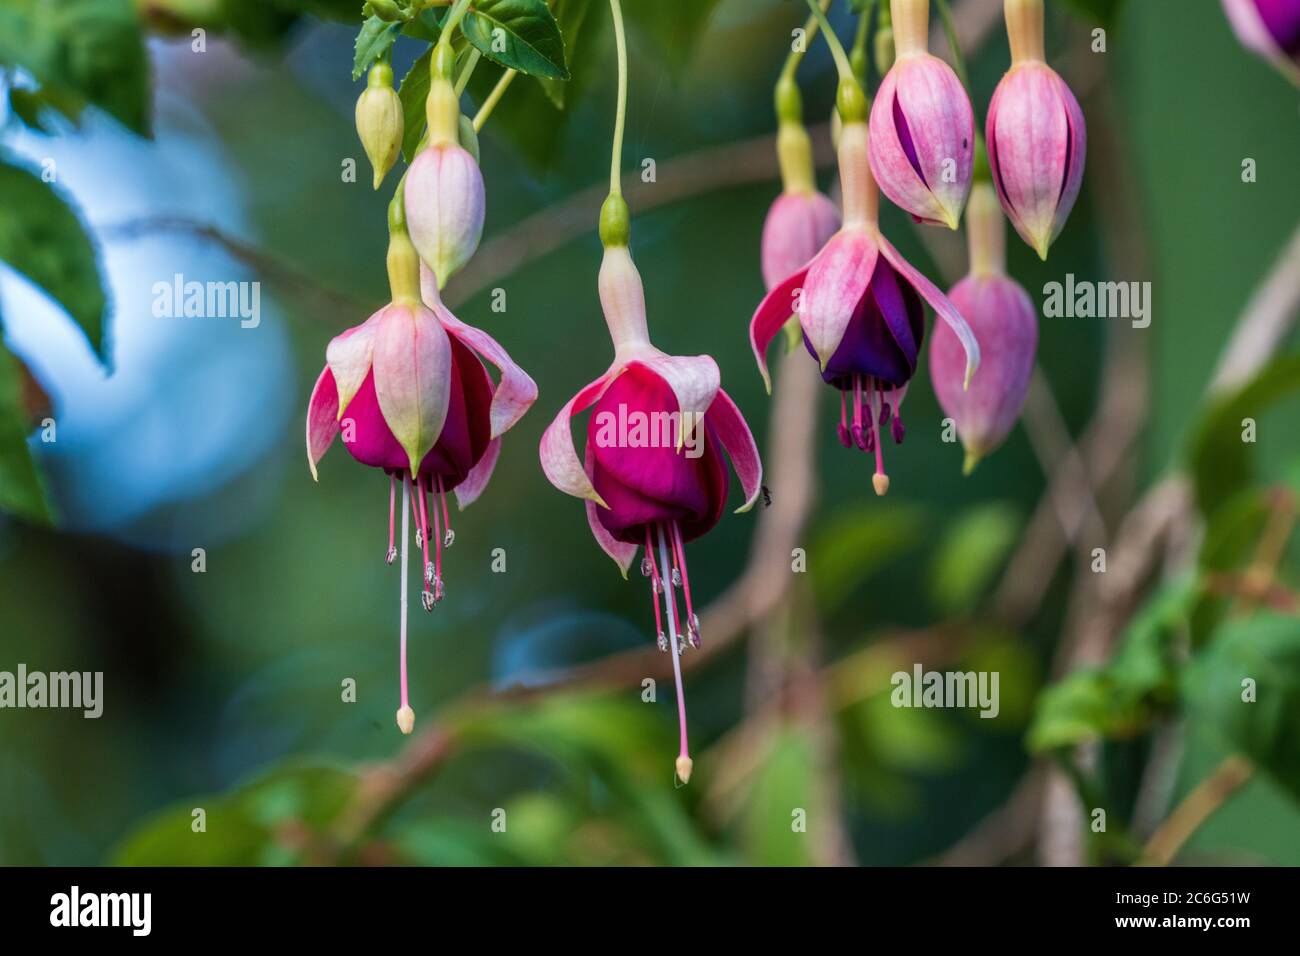 Fuchsia Flower Blurred Background Stock Photo